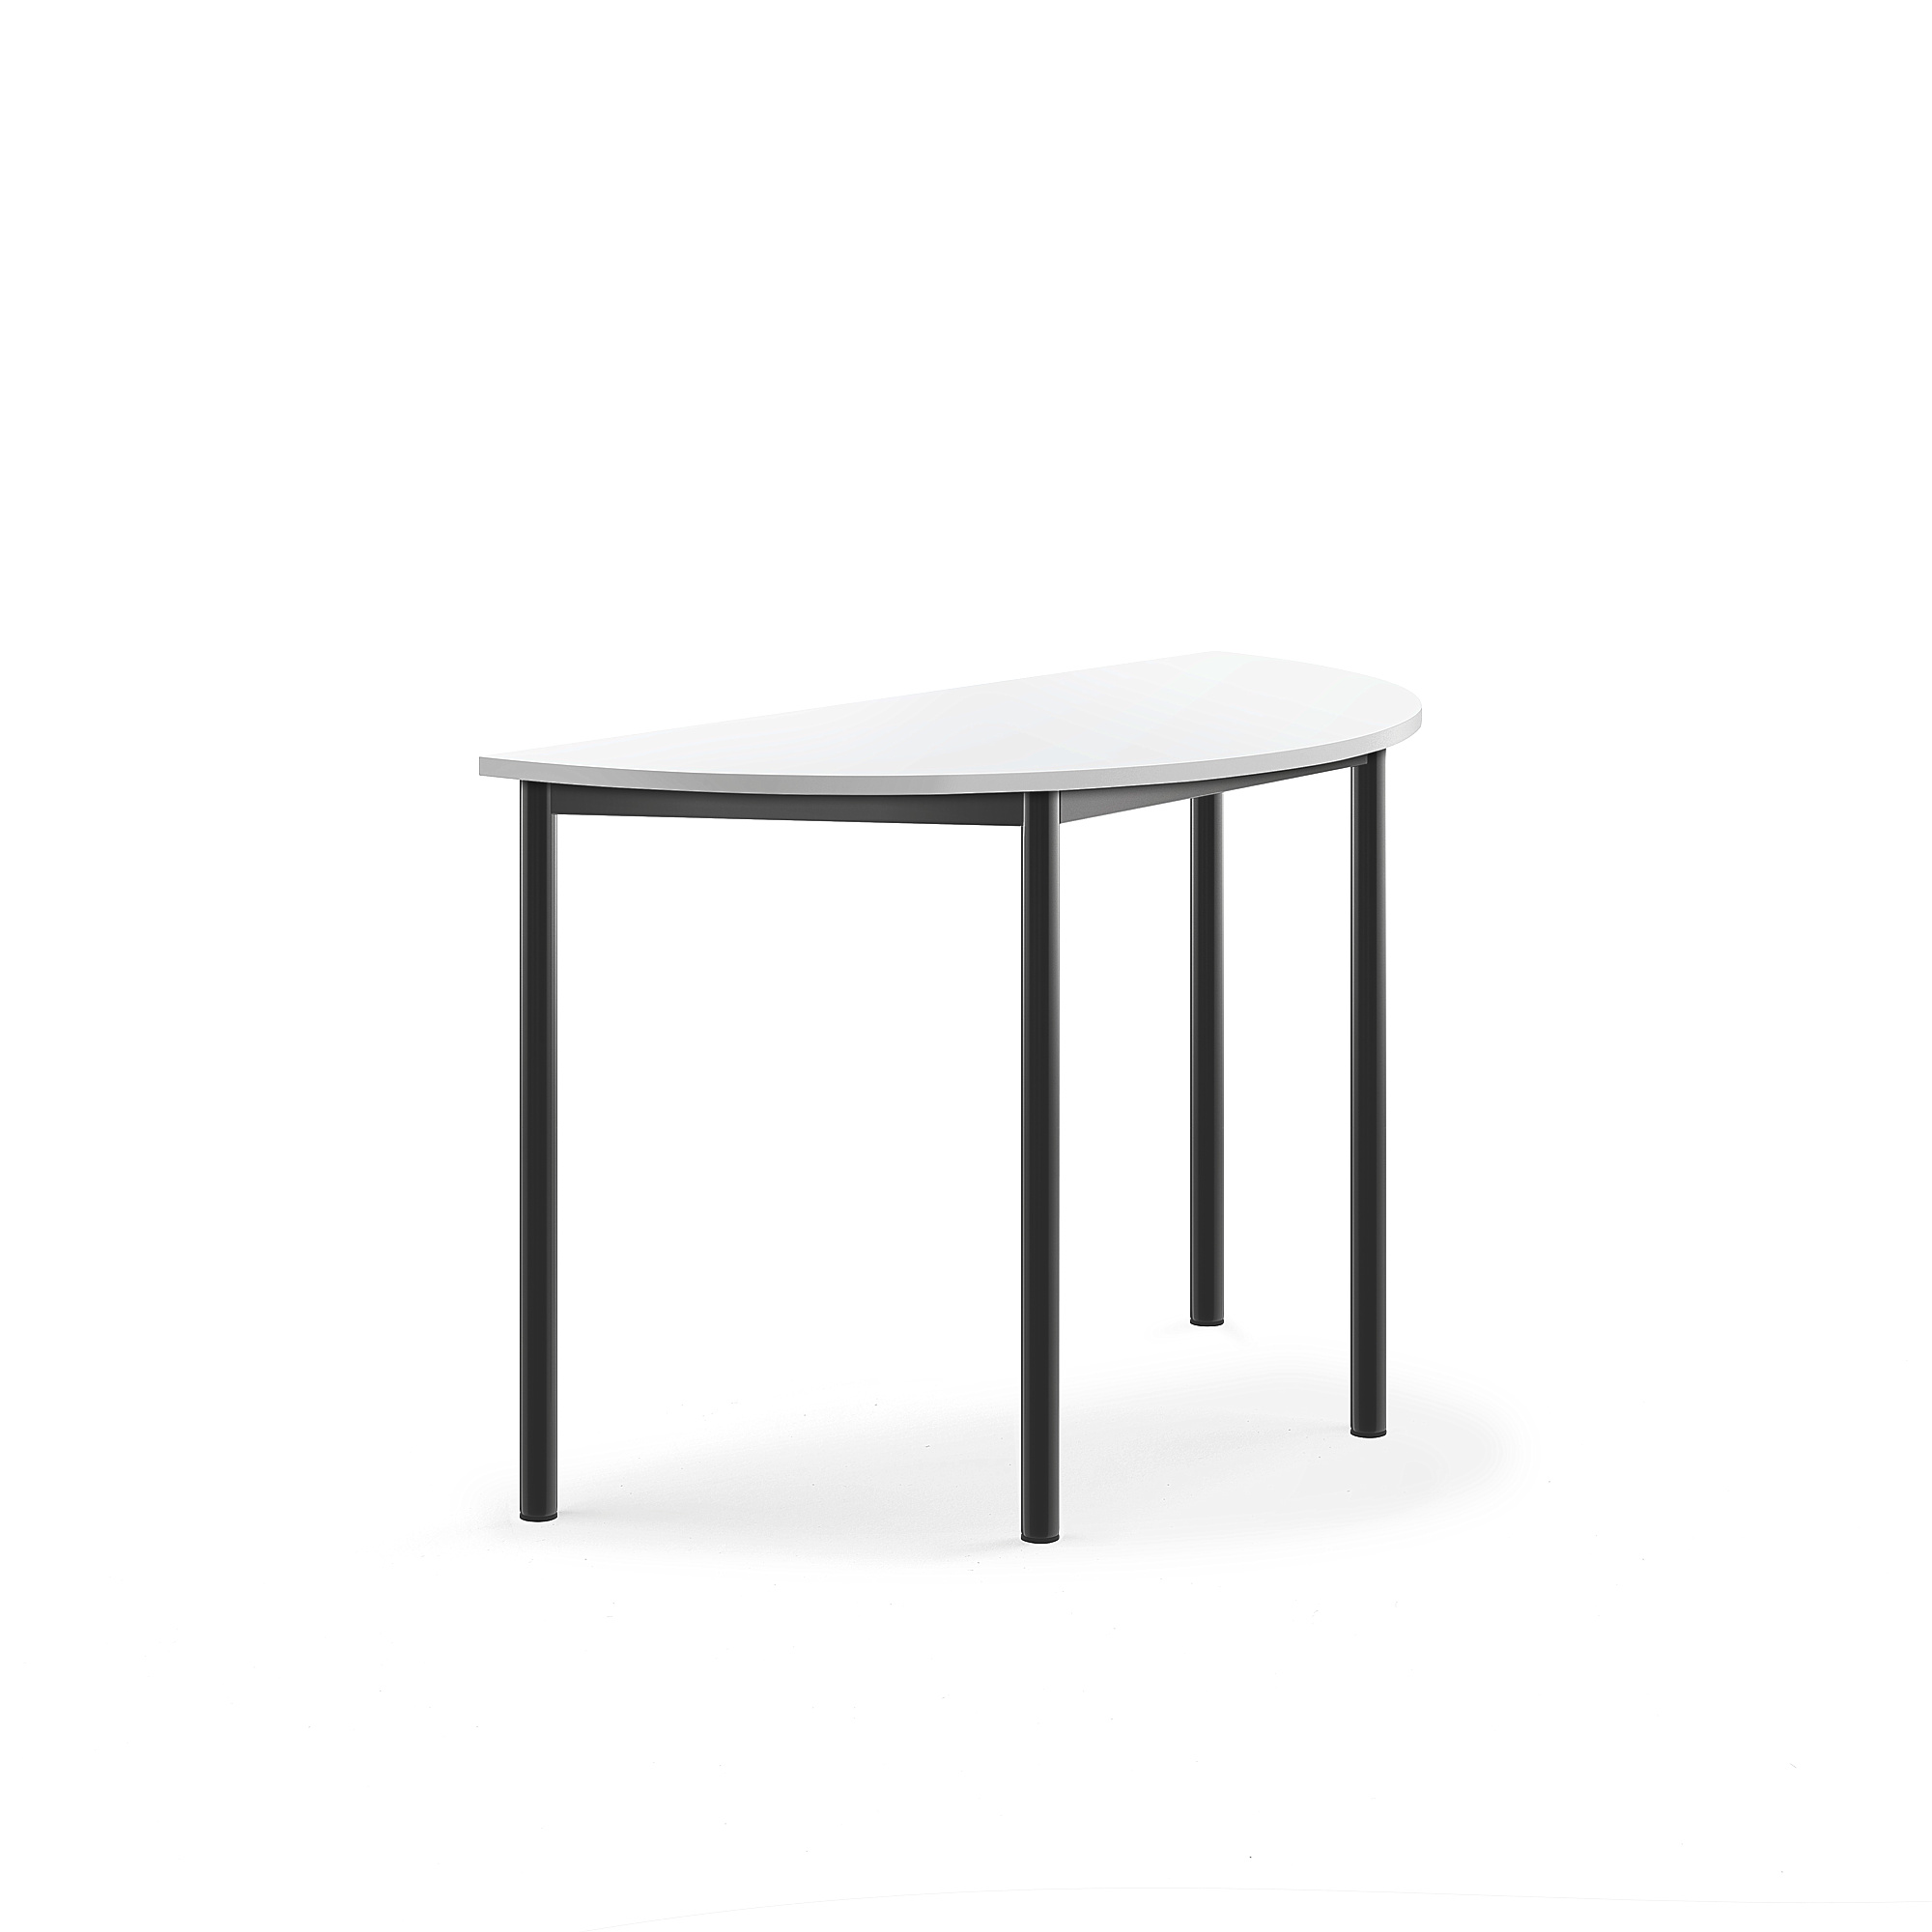 Stůl BORÅS, půlkruh, 1200x600x760 mm, antracitově šedé nohy, HPL deska, bílá